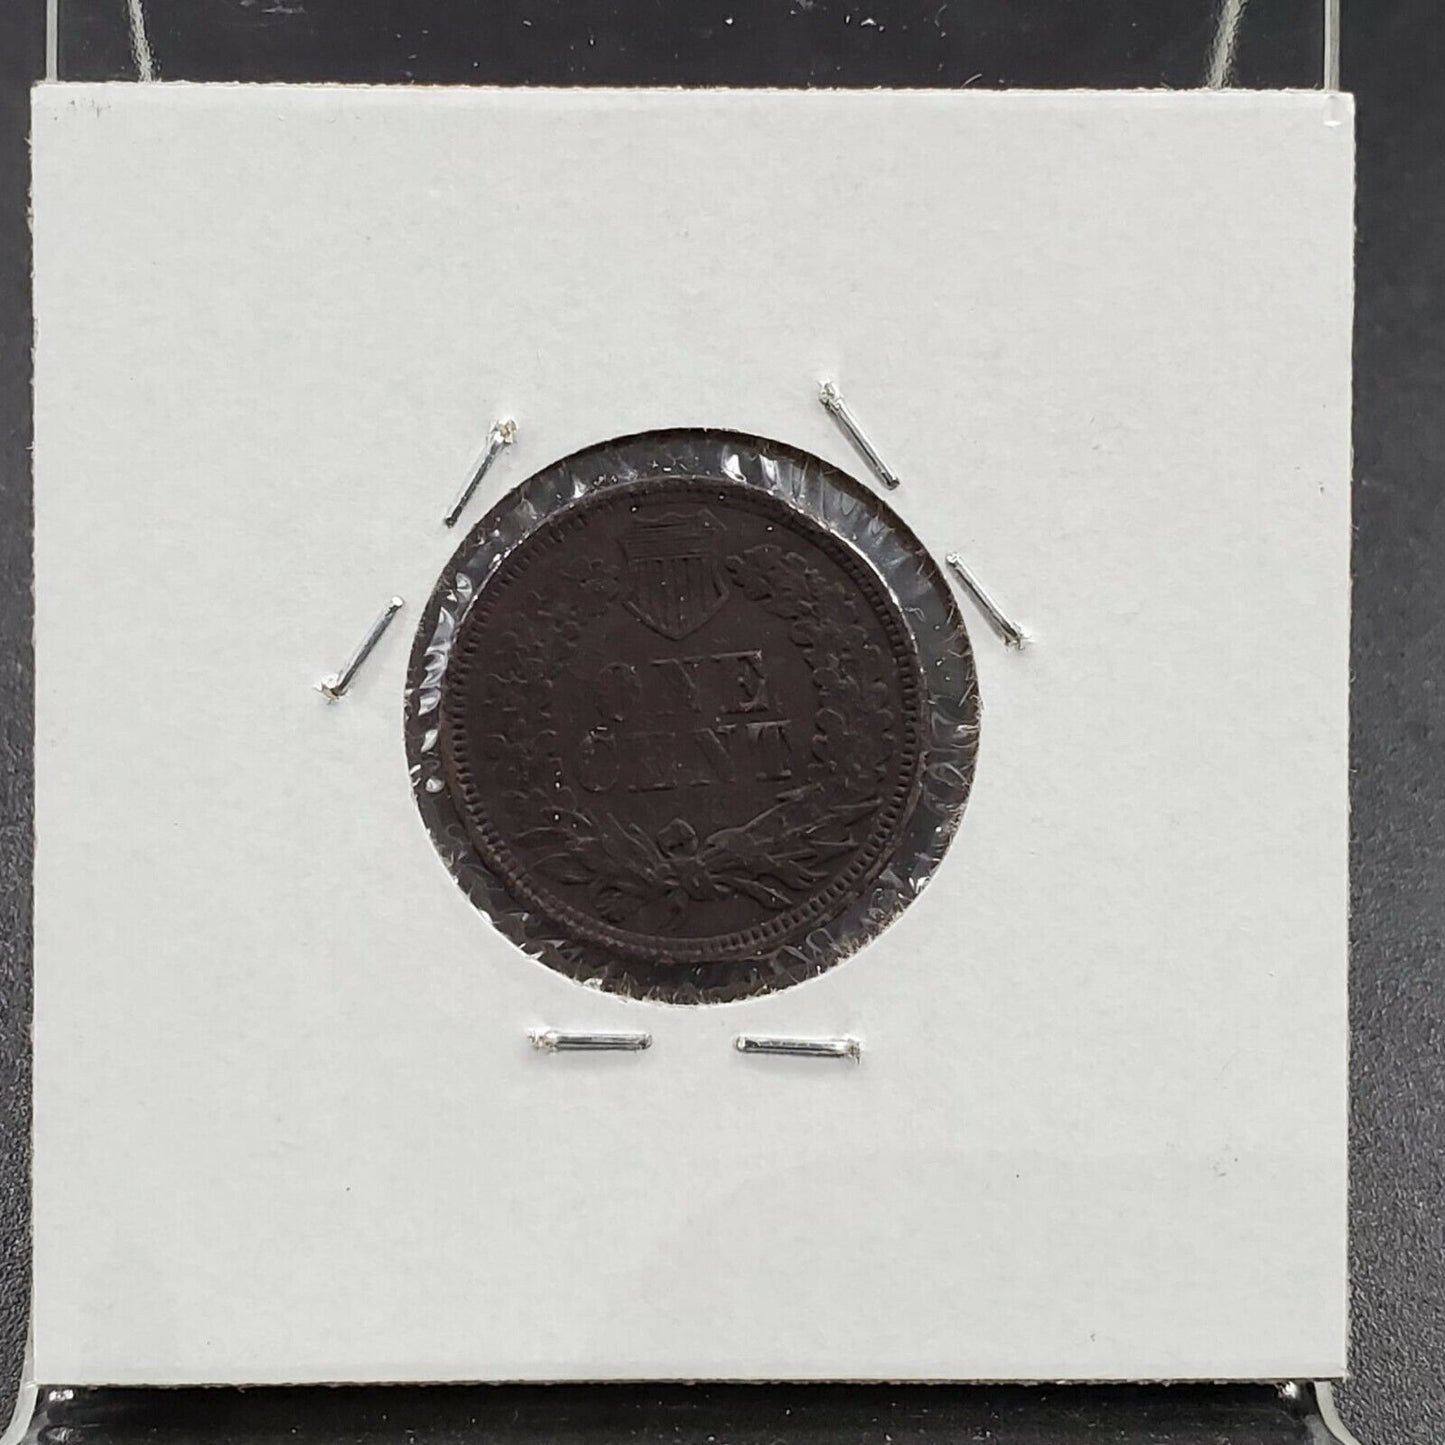 1862 Indian Head Cent Coin Copper Nickel Civil War Issue VF Detail Dark Toned